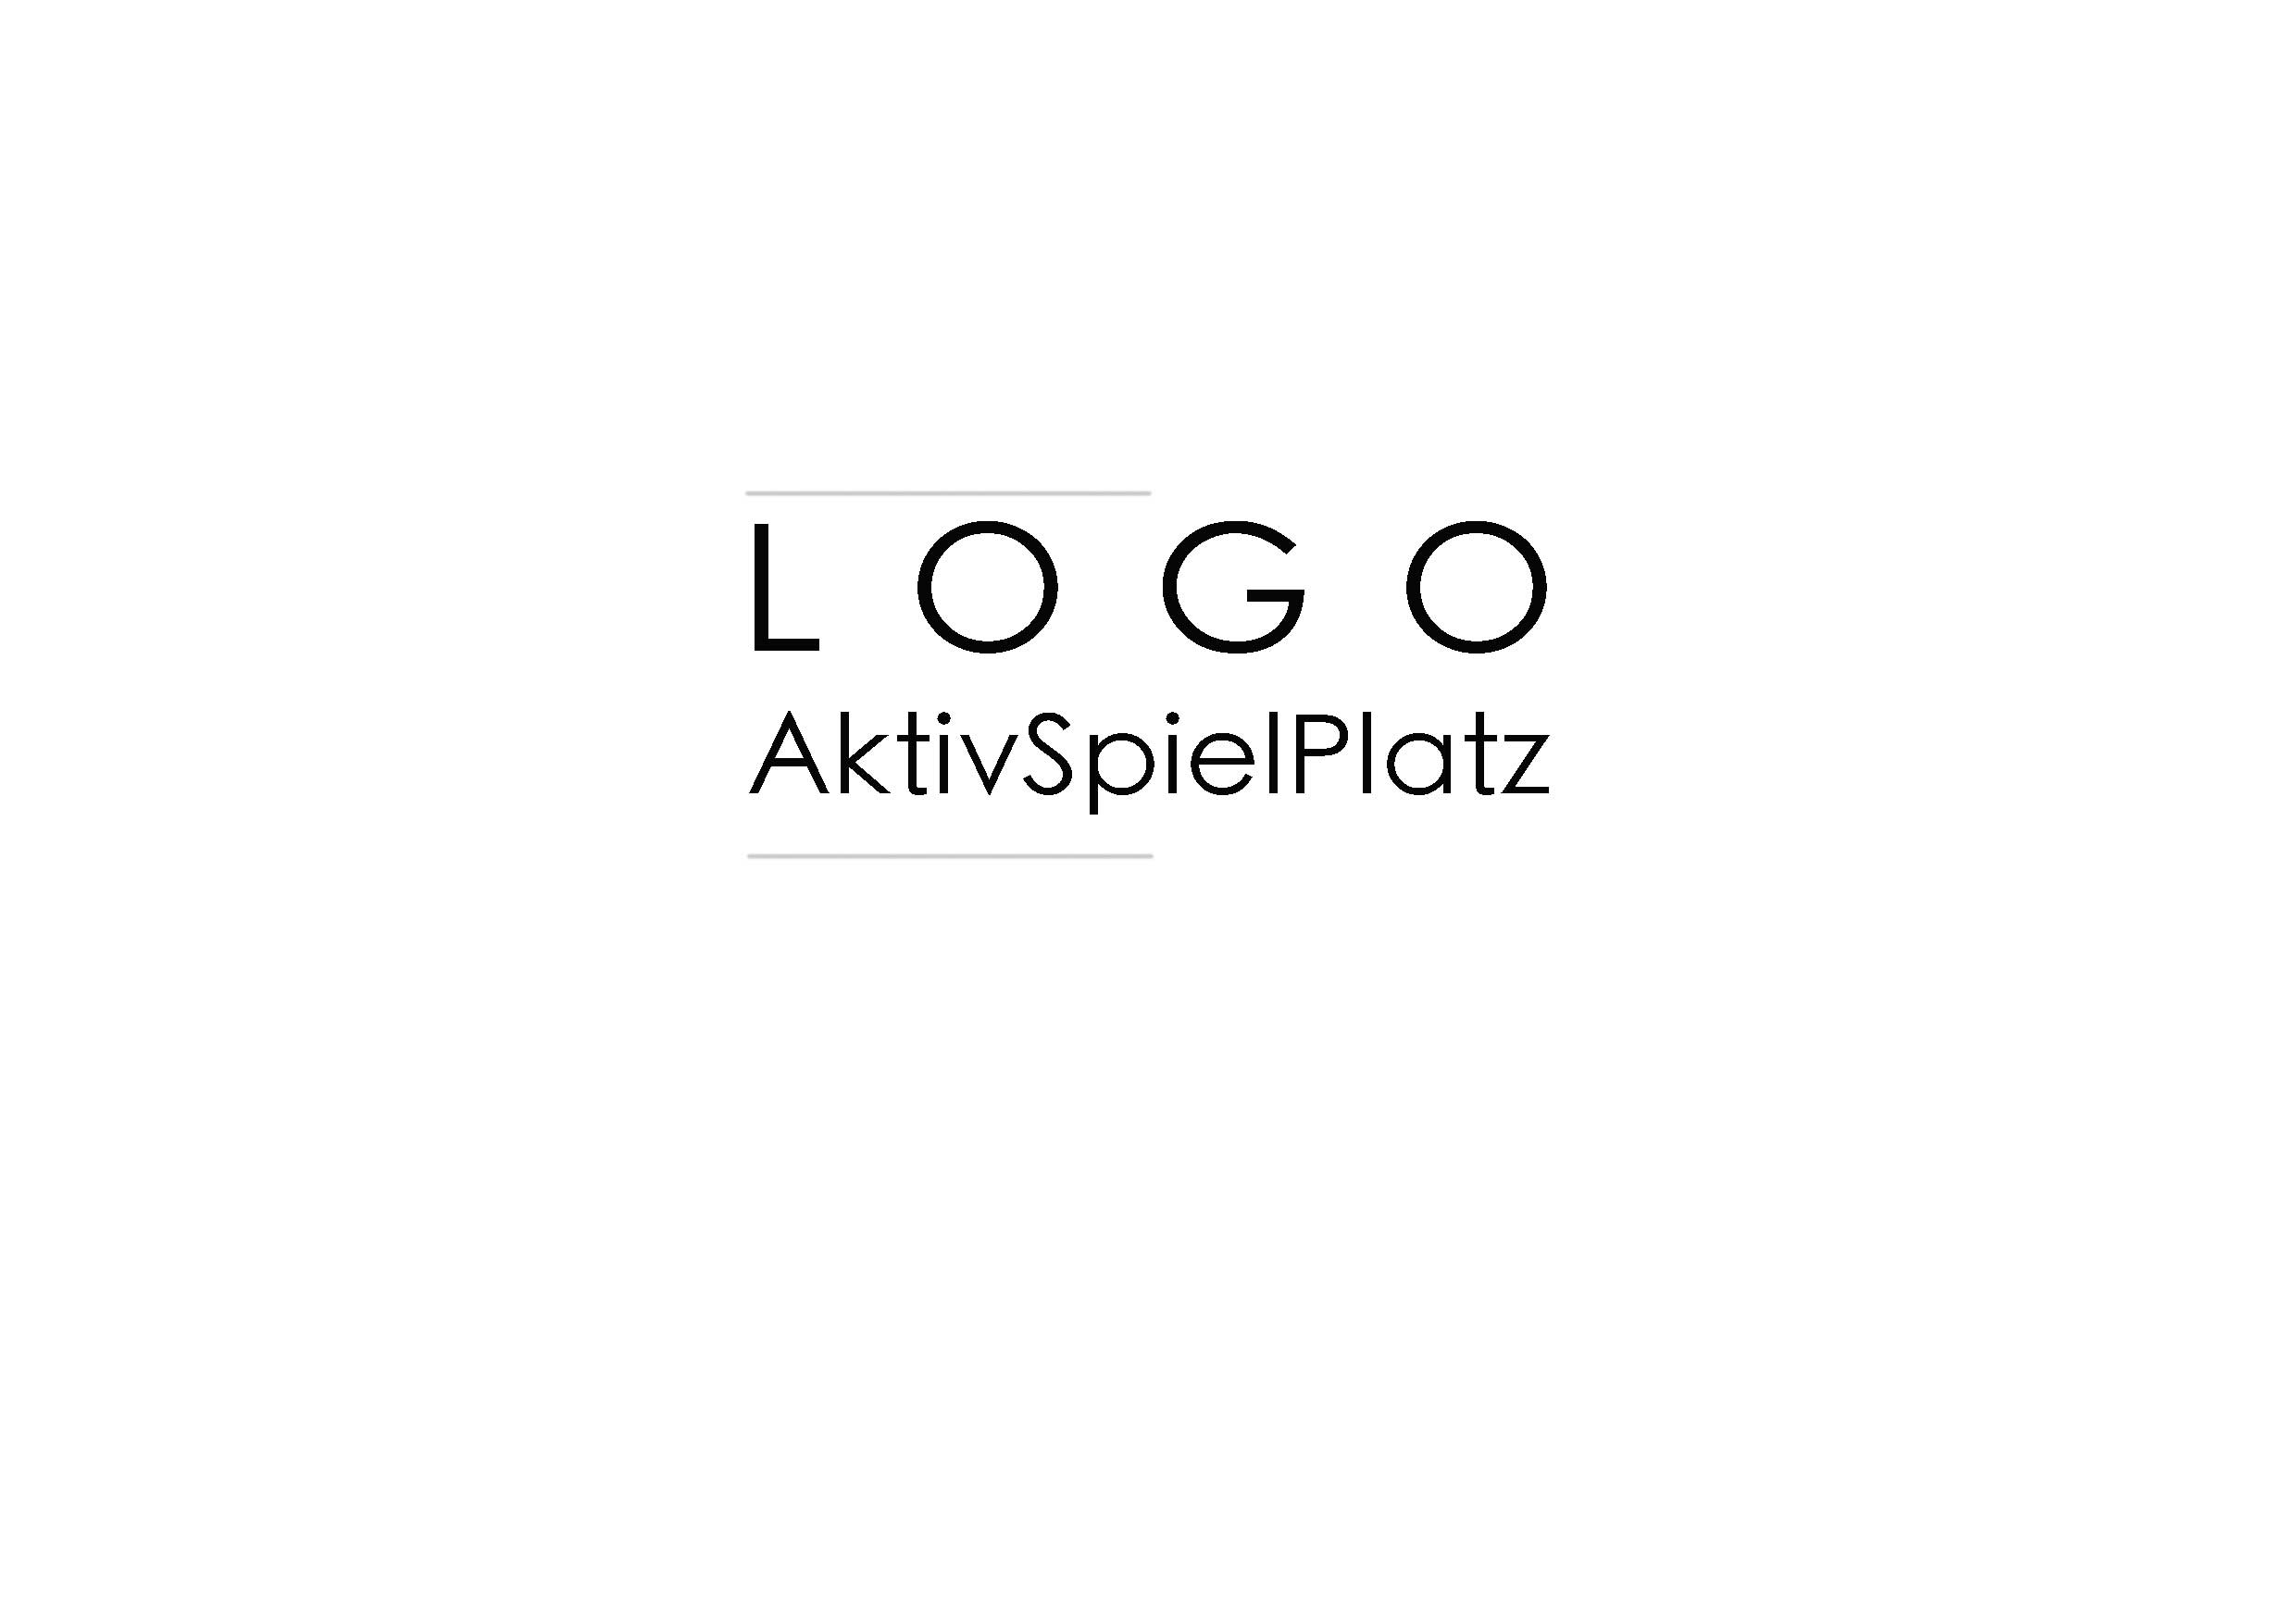 logo and business cards - AKTIV SPIEL PLATZ